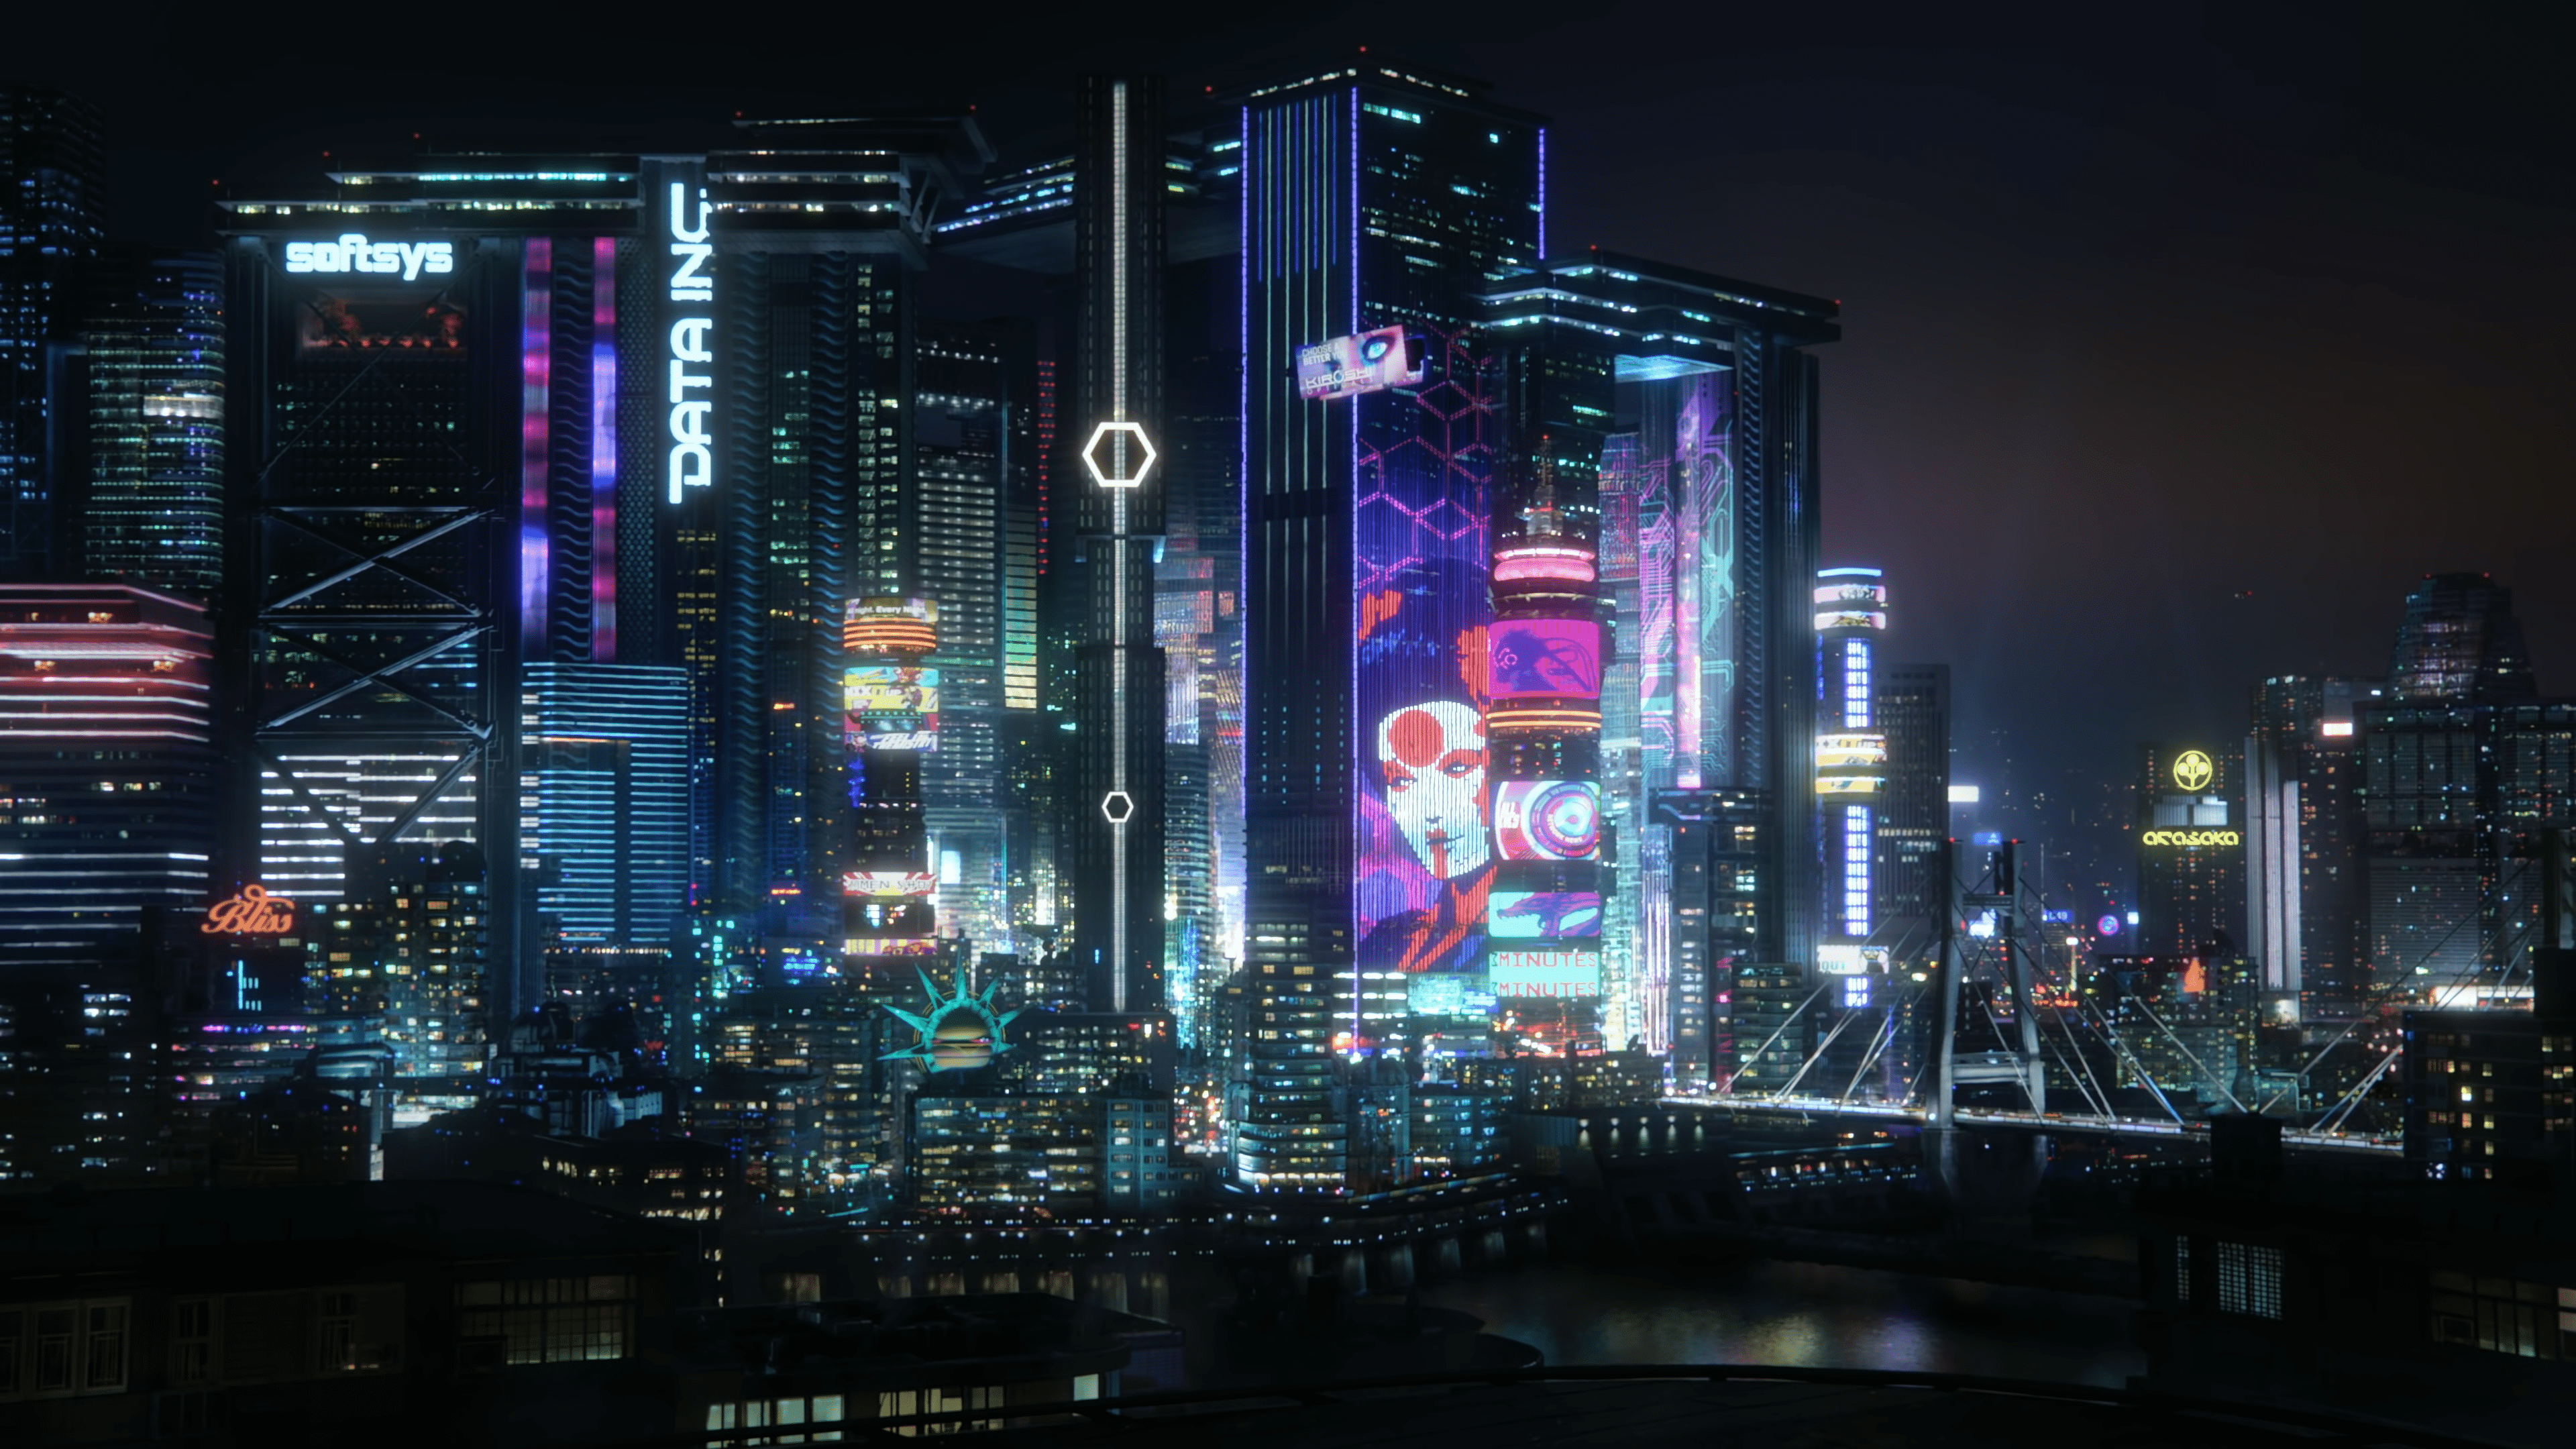 Cyberpunk Night City Wallpapers - Top Free Cyberpunk Night City